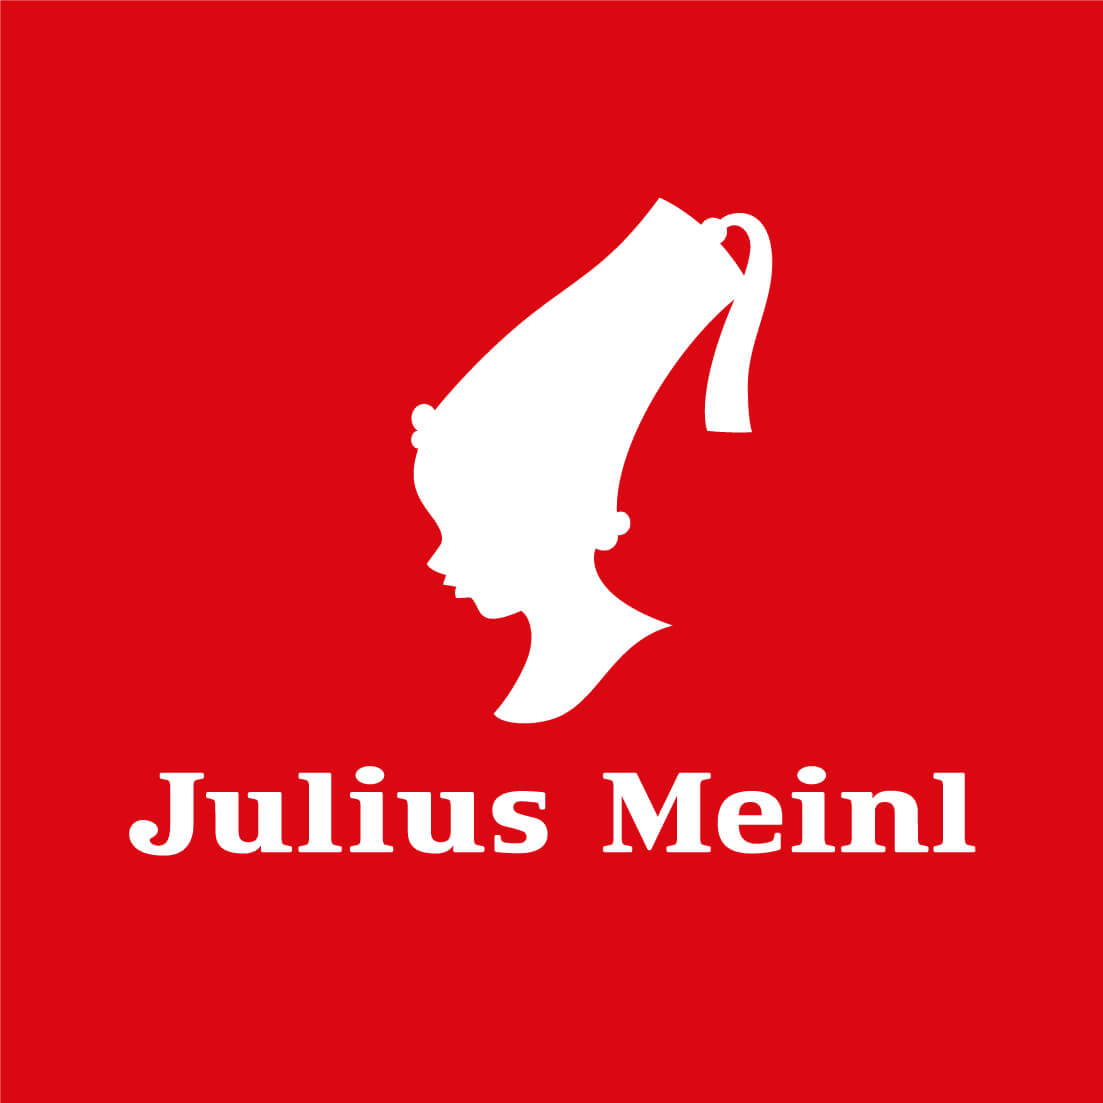 Julius Meinl Kaffee Logo